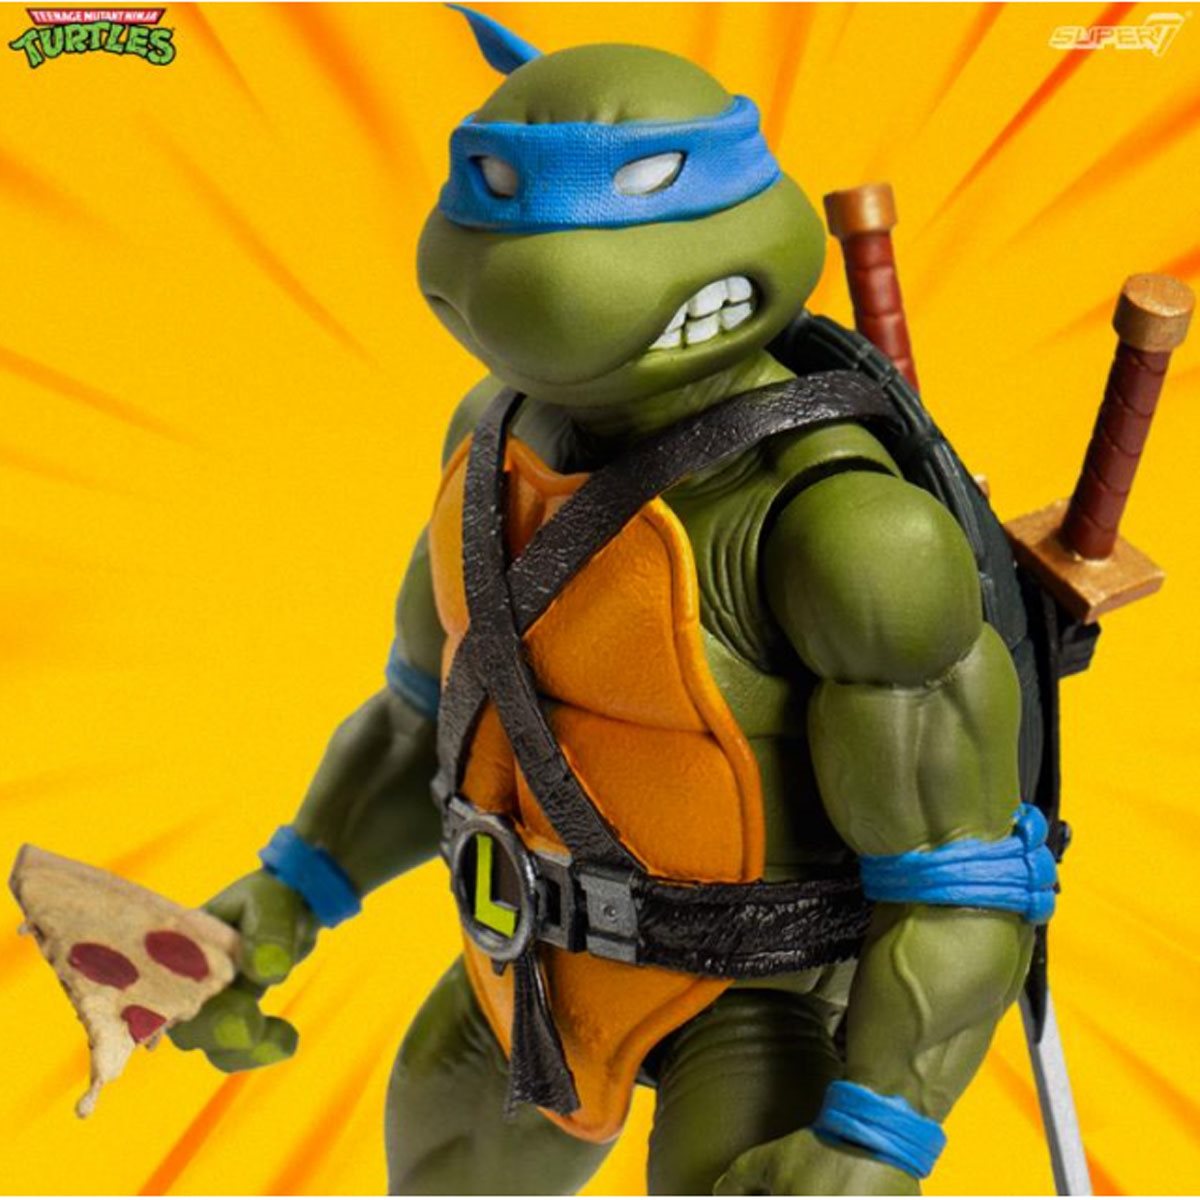 Super7 Teenage Mutant Ninja Turtles Ultimates Shredder Action Figure 7" for sale online 